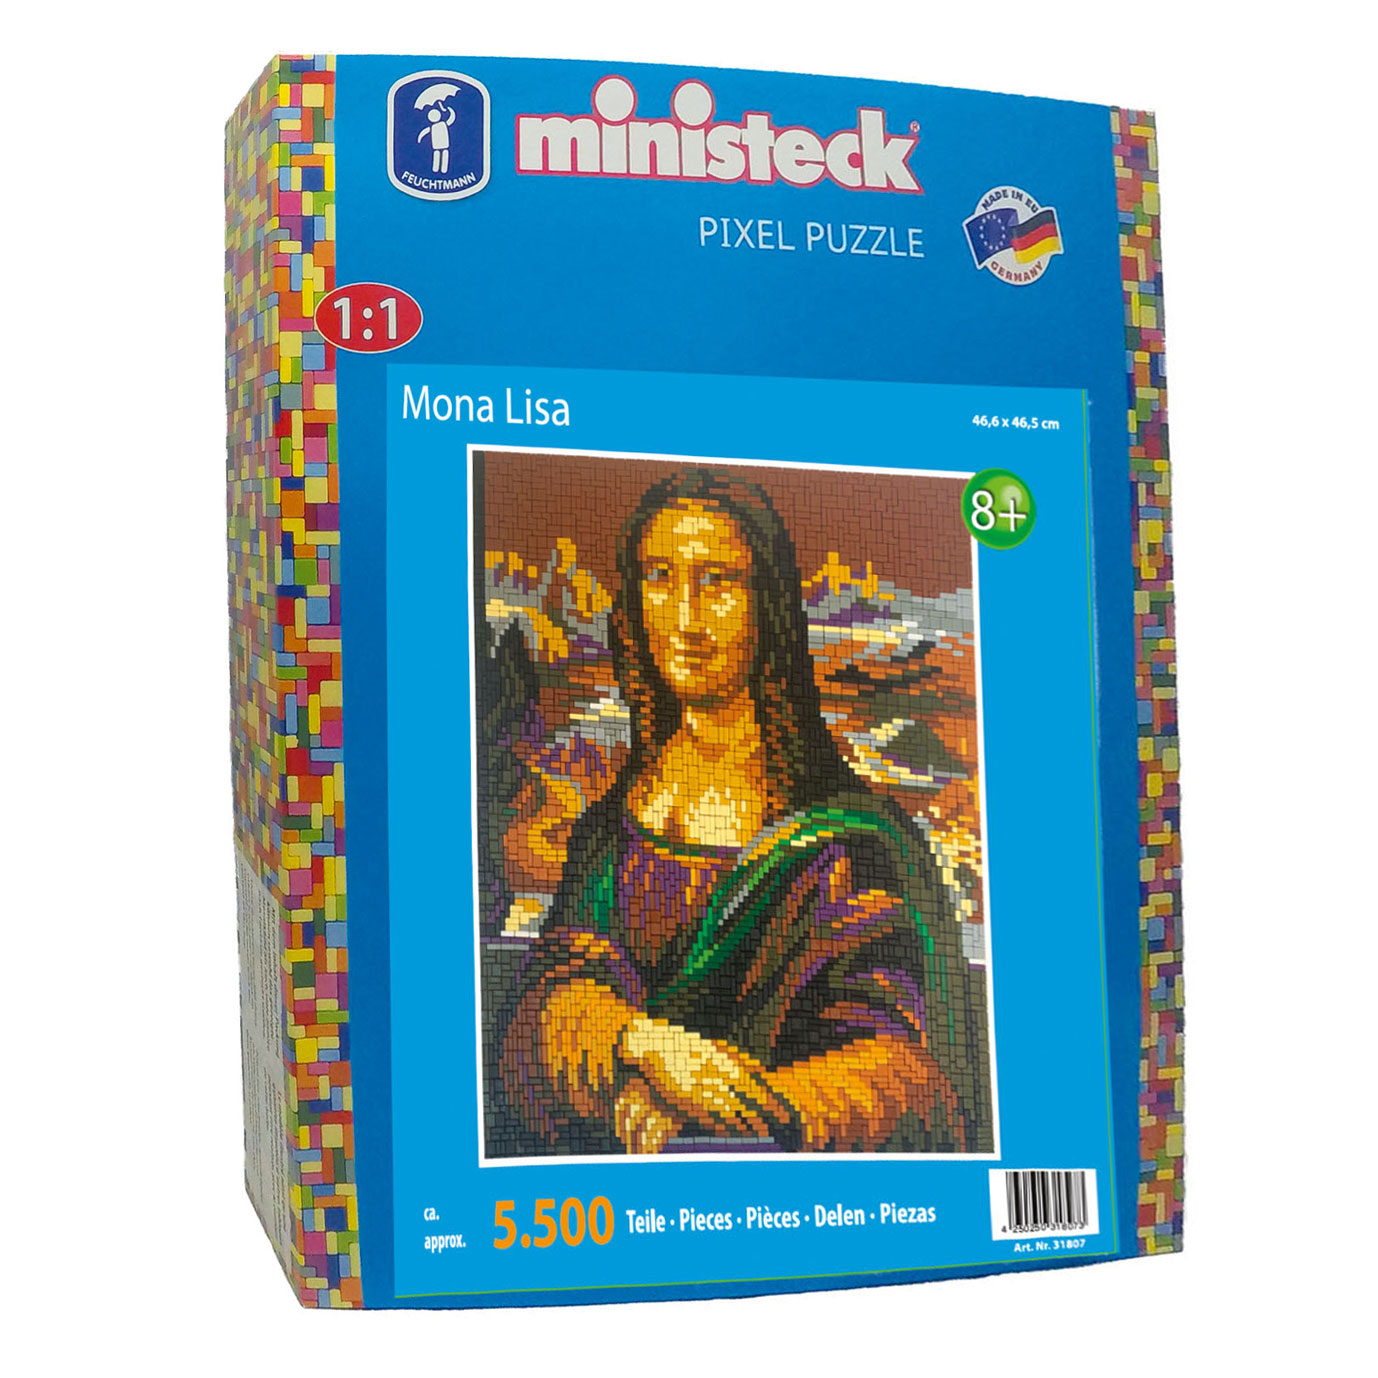 Ministeck Mona Lisa, 5500dlg.